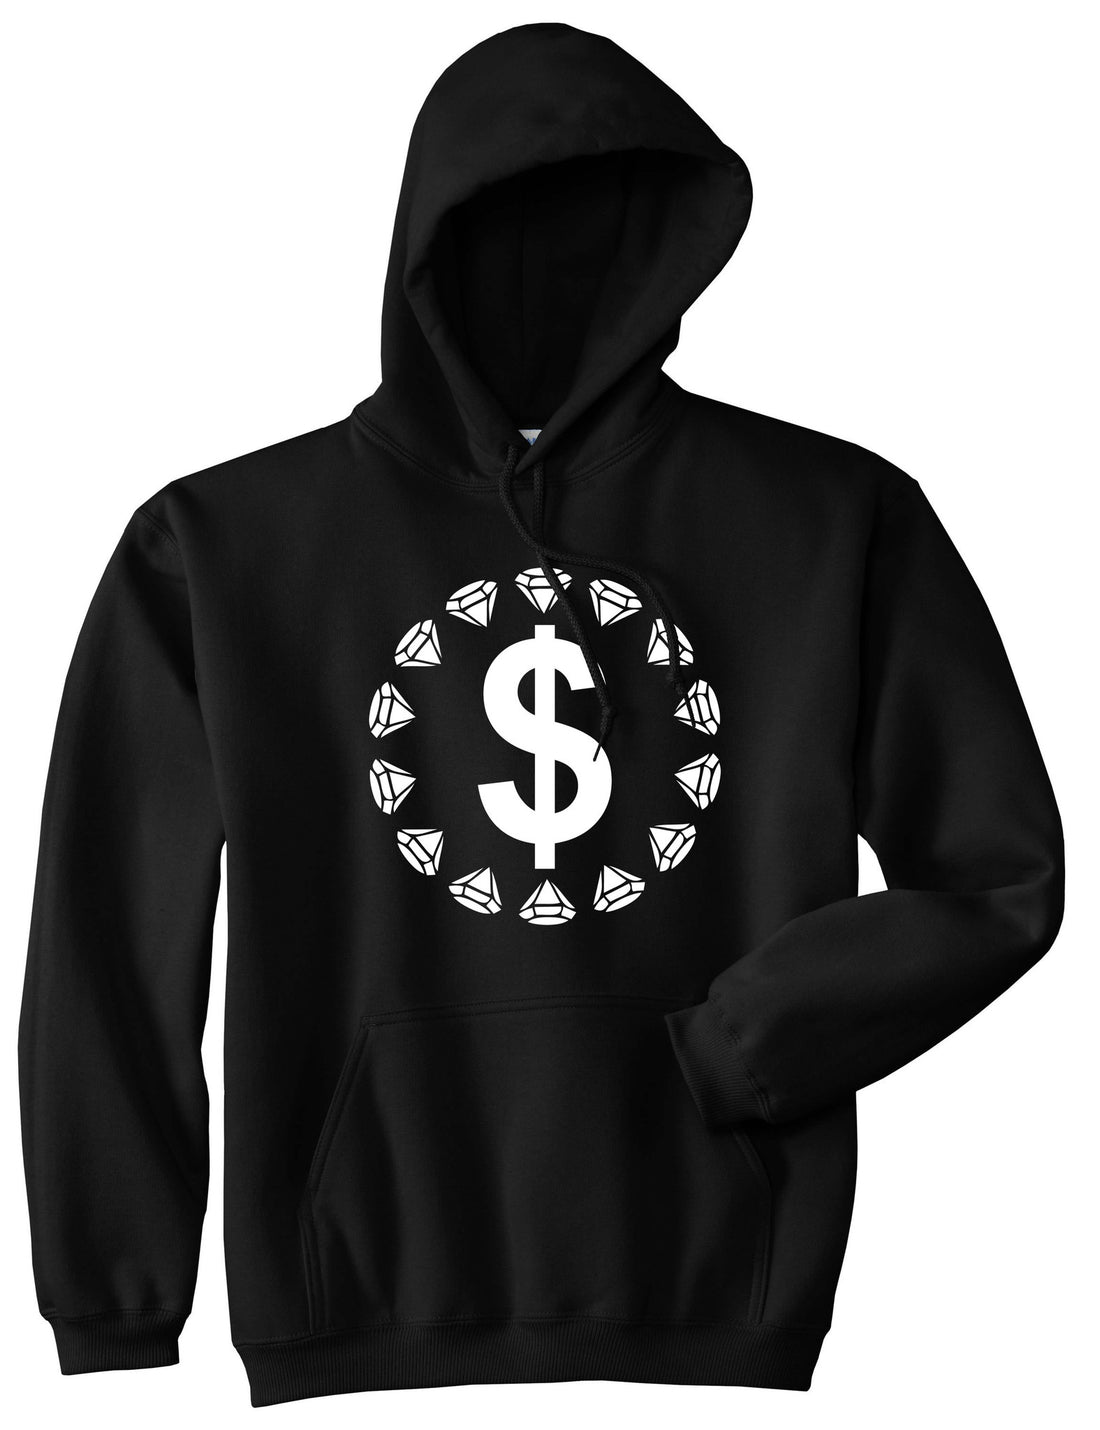 Diamonds Money Sign Logo Pullover Hoodie Hoody in Black by Kings Of NY